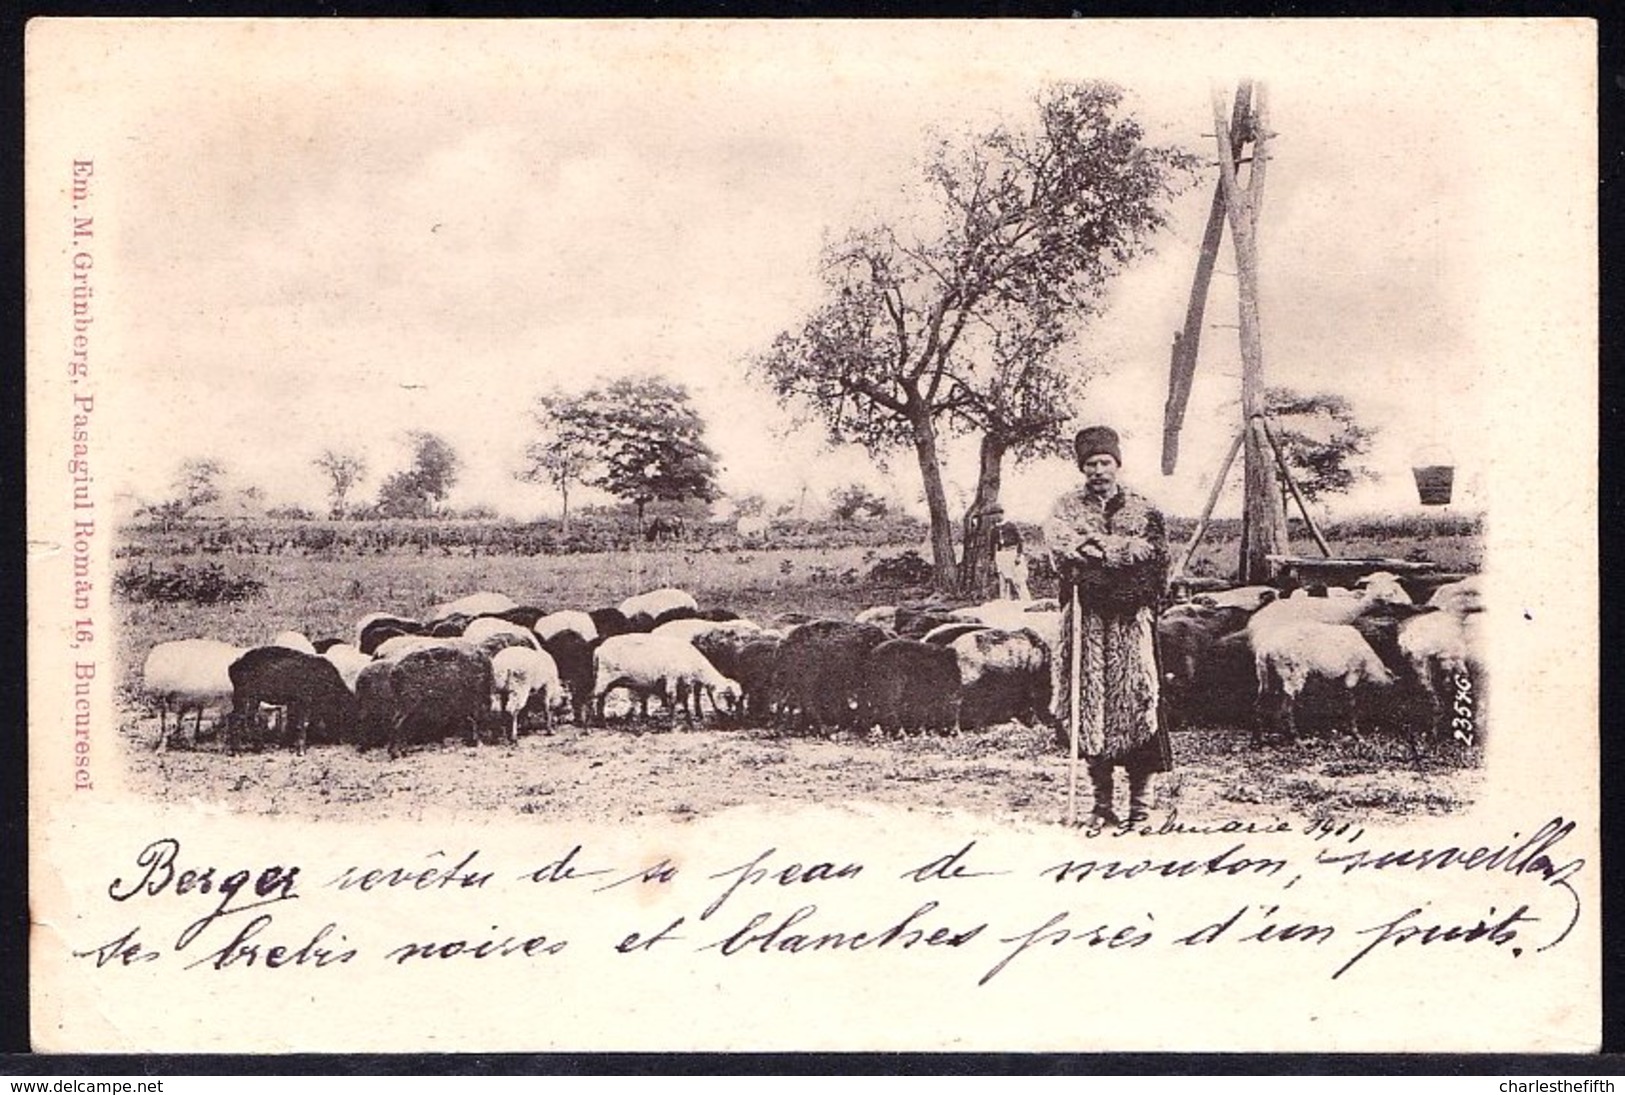 1901 ROMANIAN CPA ** SHEPHERD WITH SHEEP - BERGER AVEC MOUTON ** édit. Em. M. Grünberg - Bucuresci - Rumania